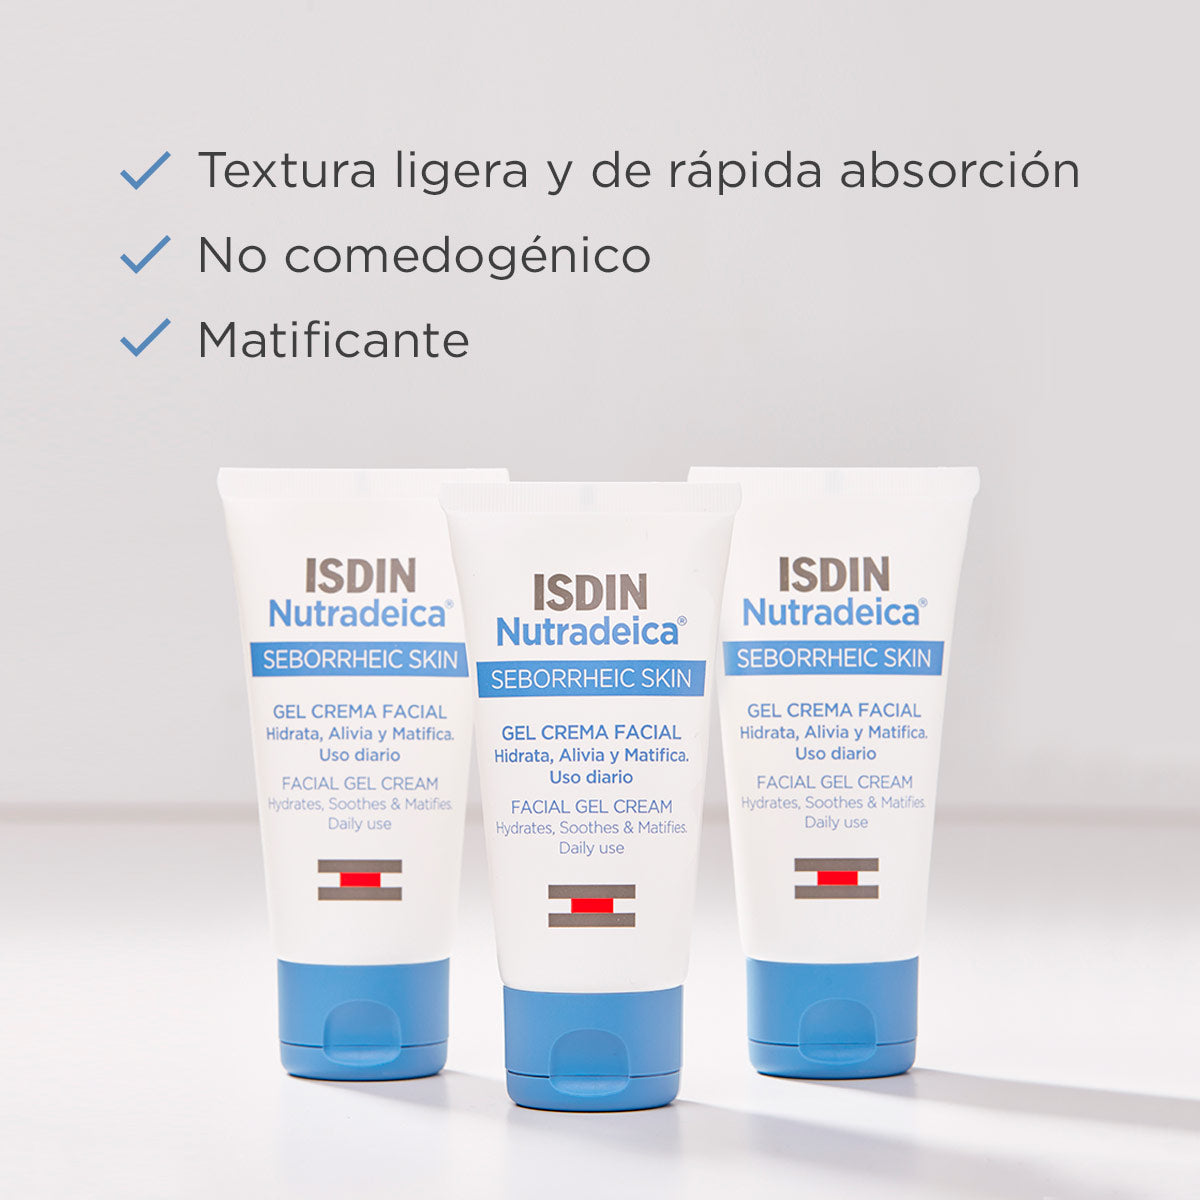 Isdin Nutradeica Gel Face Cream - 50ml/1.69fl oz - Vitamin E, B3, Zinc, Copper & Selenium - Pyrenees Thermal Water